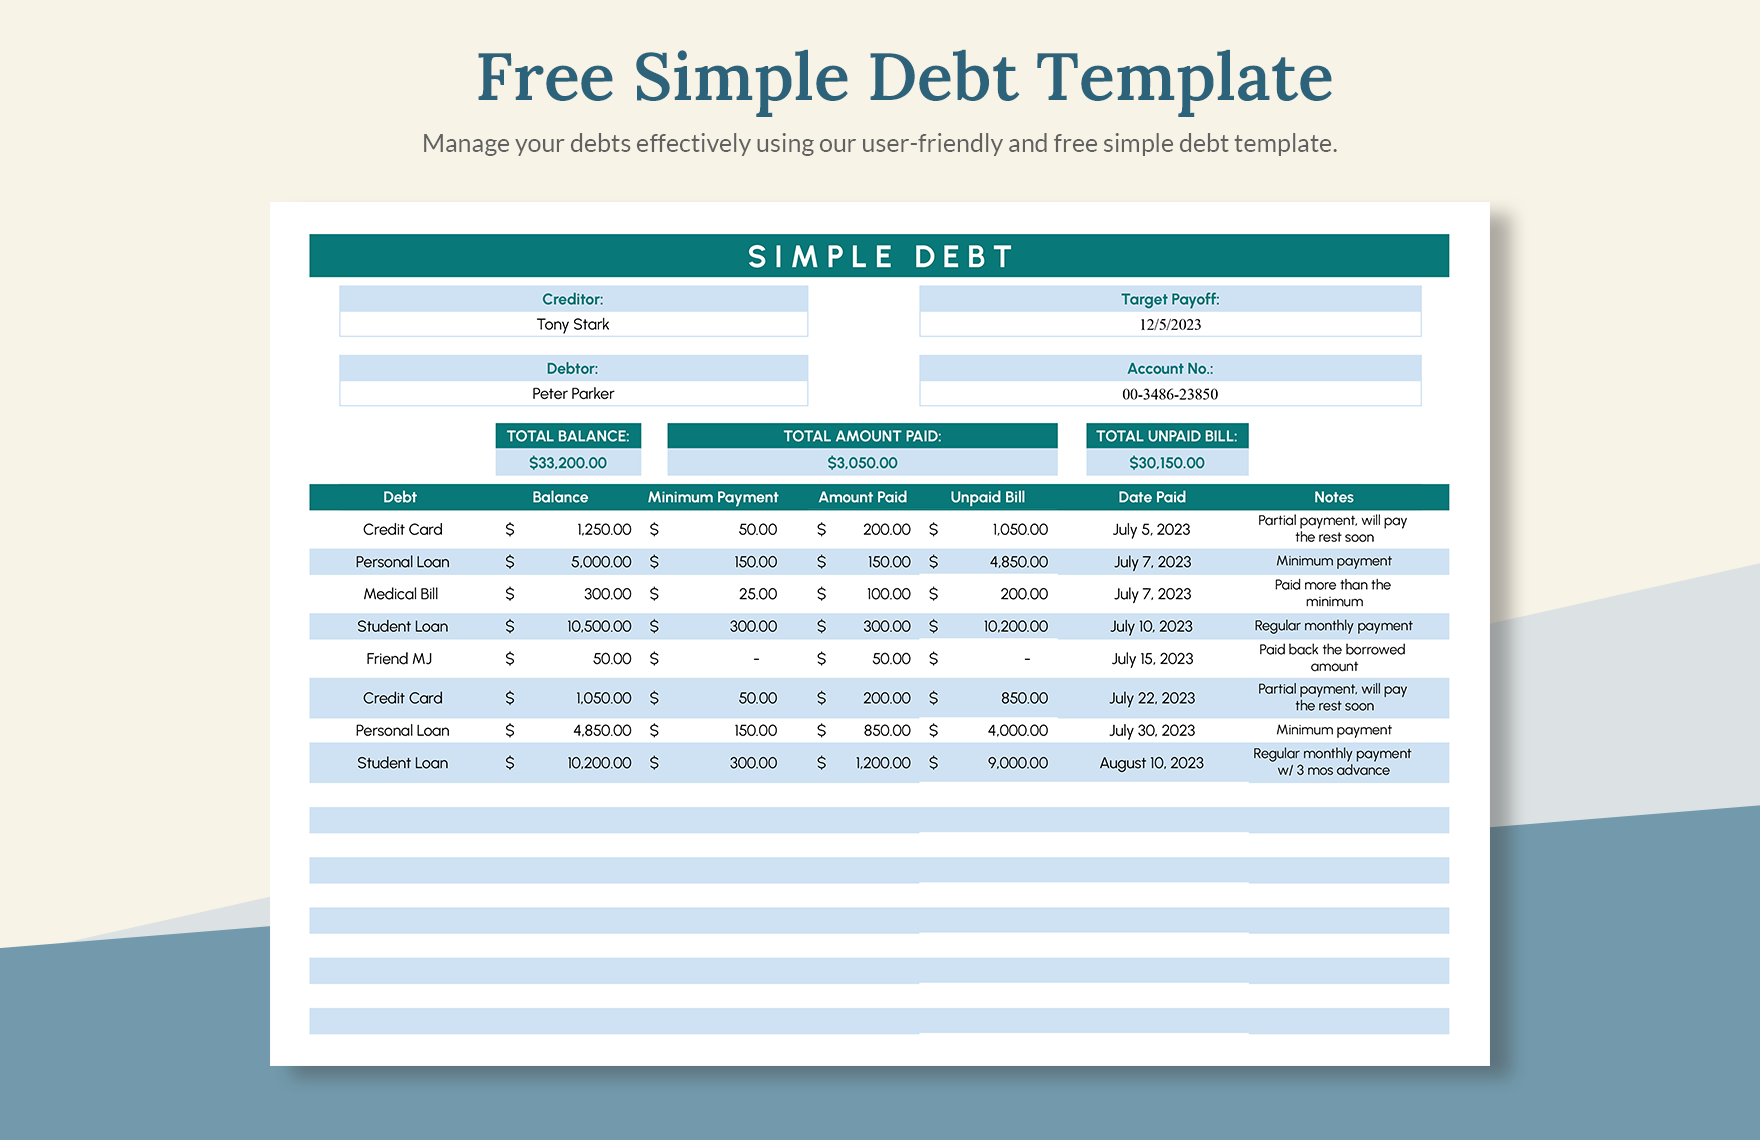 Free Simple Debt Template